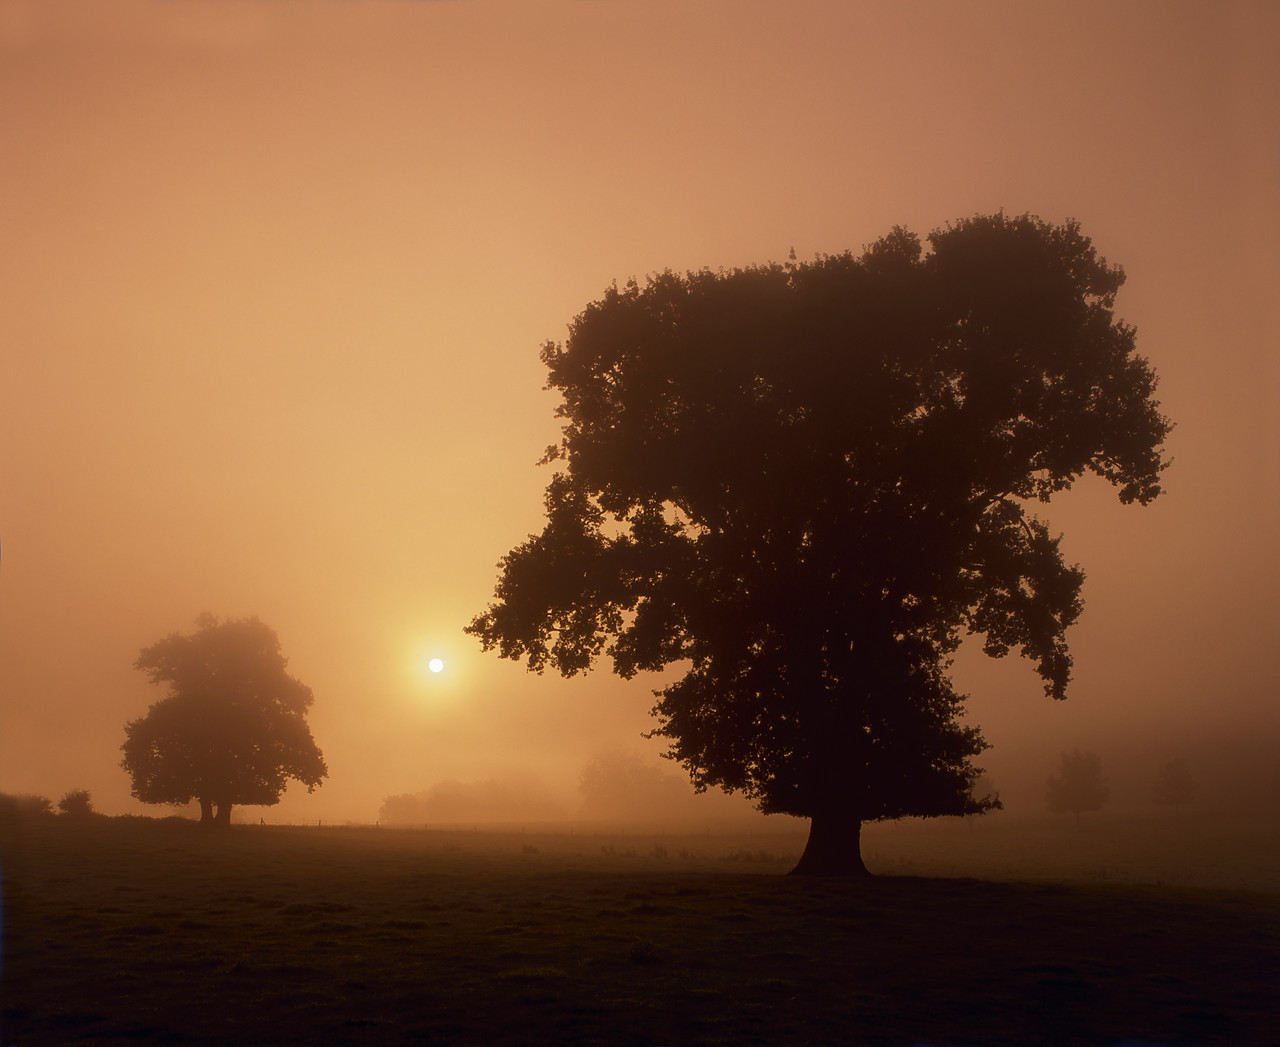 #040247-1 - Trees in Morning Mist, Surlingham, Norfolk, England